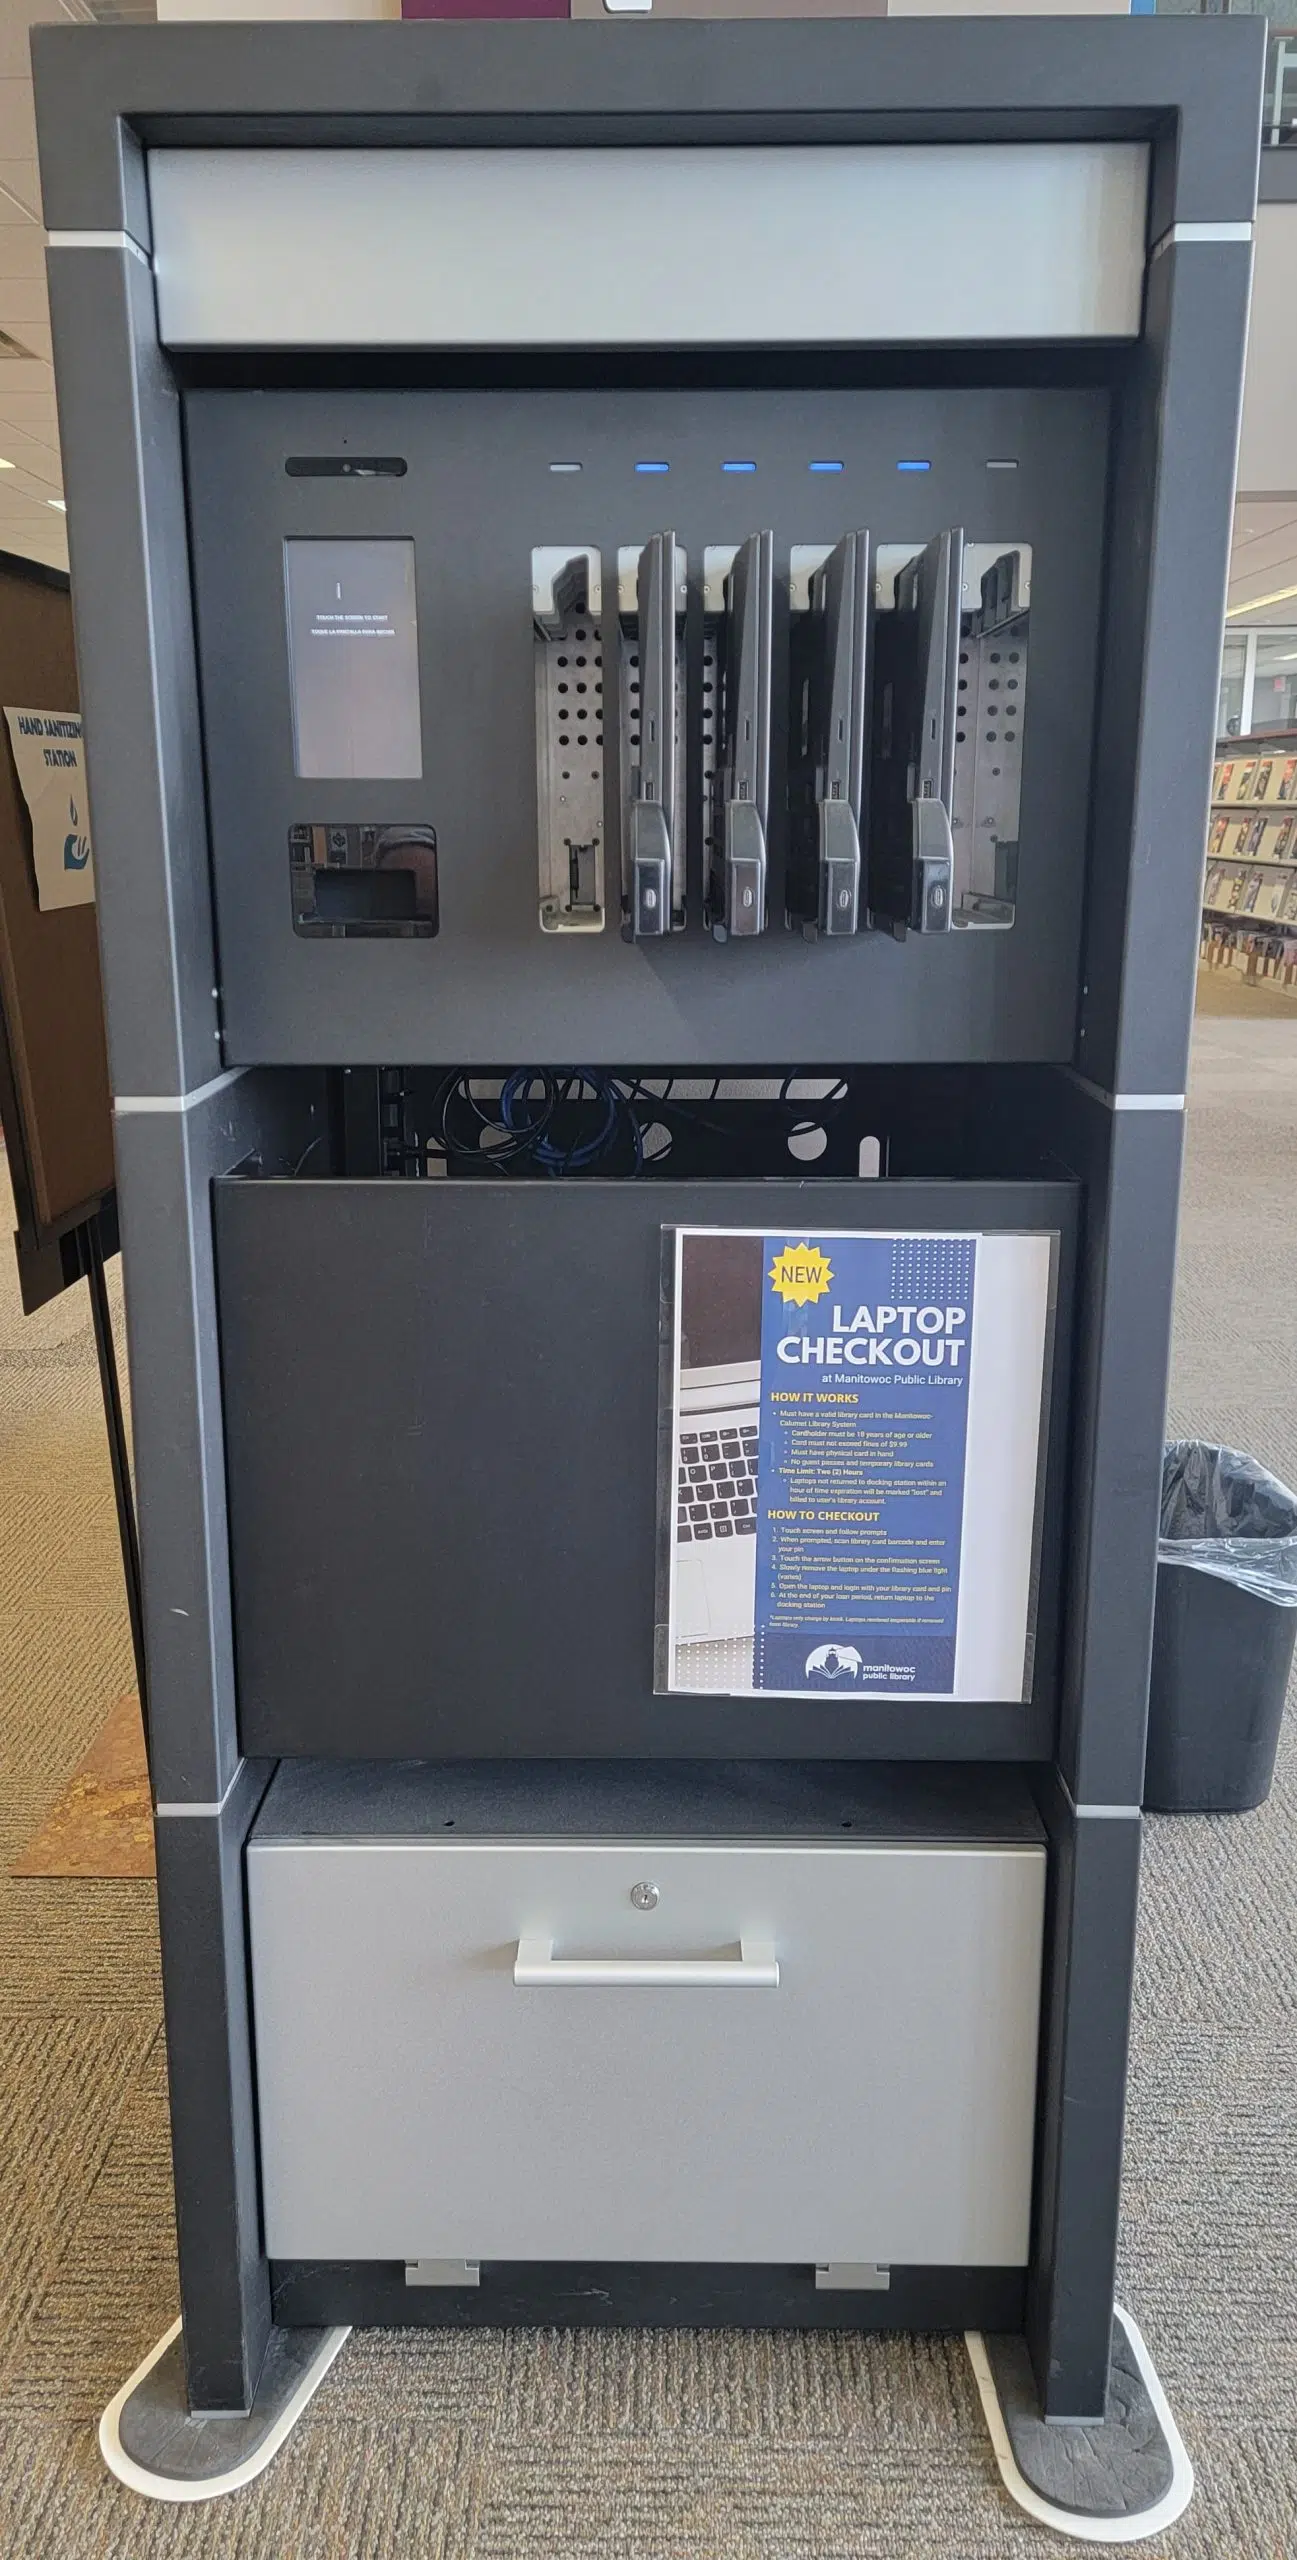 Manitowoc Public Library Introduces Laptop Checkout Kiosk